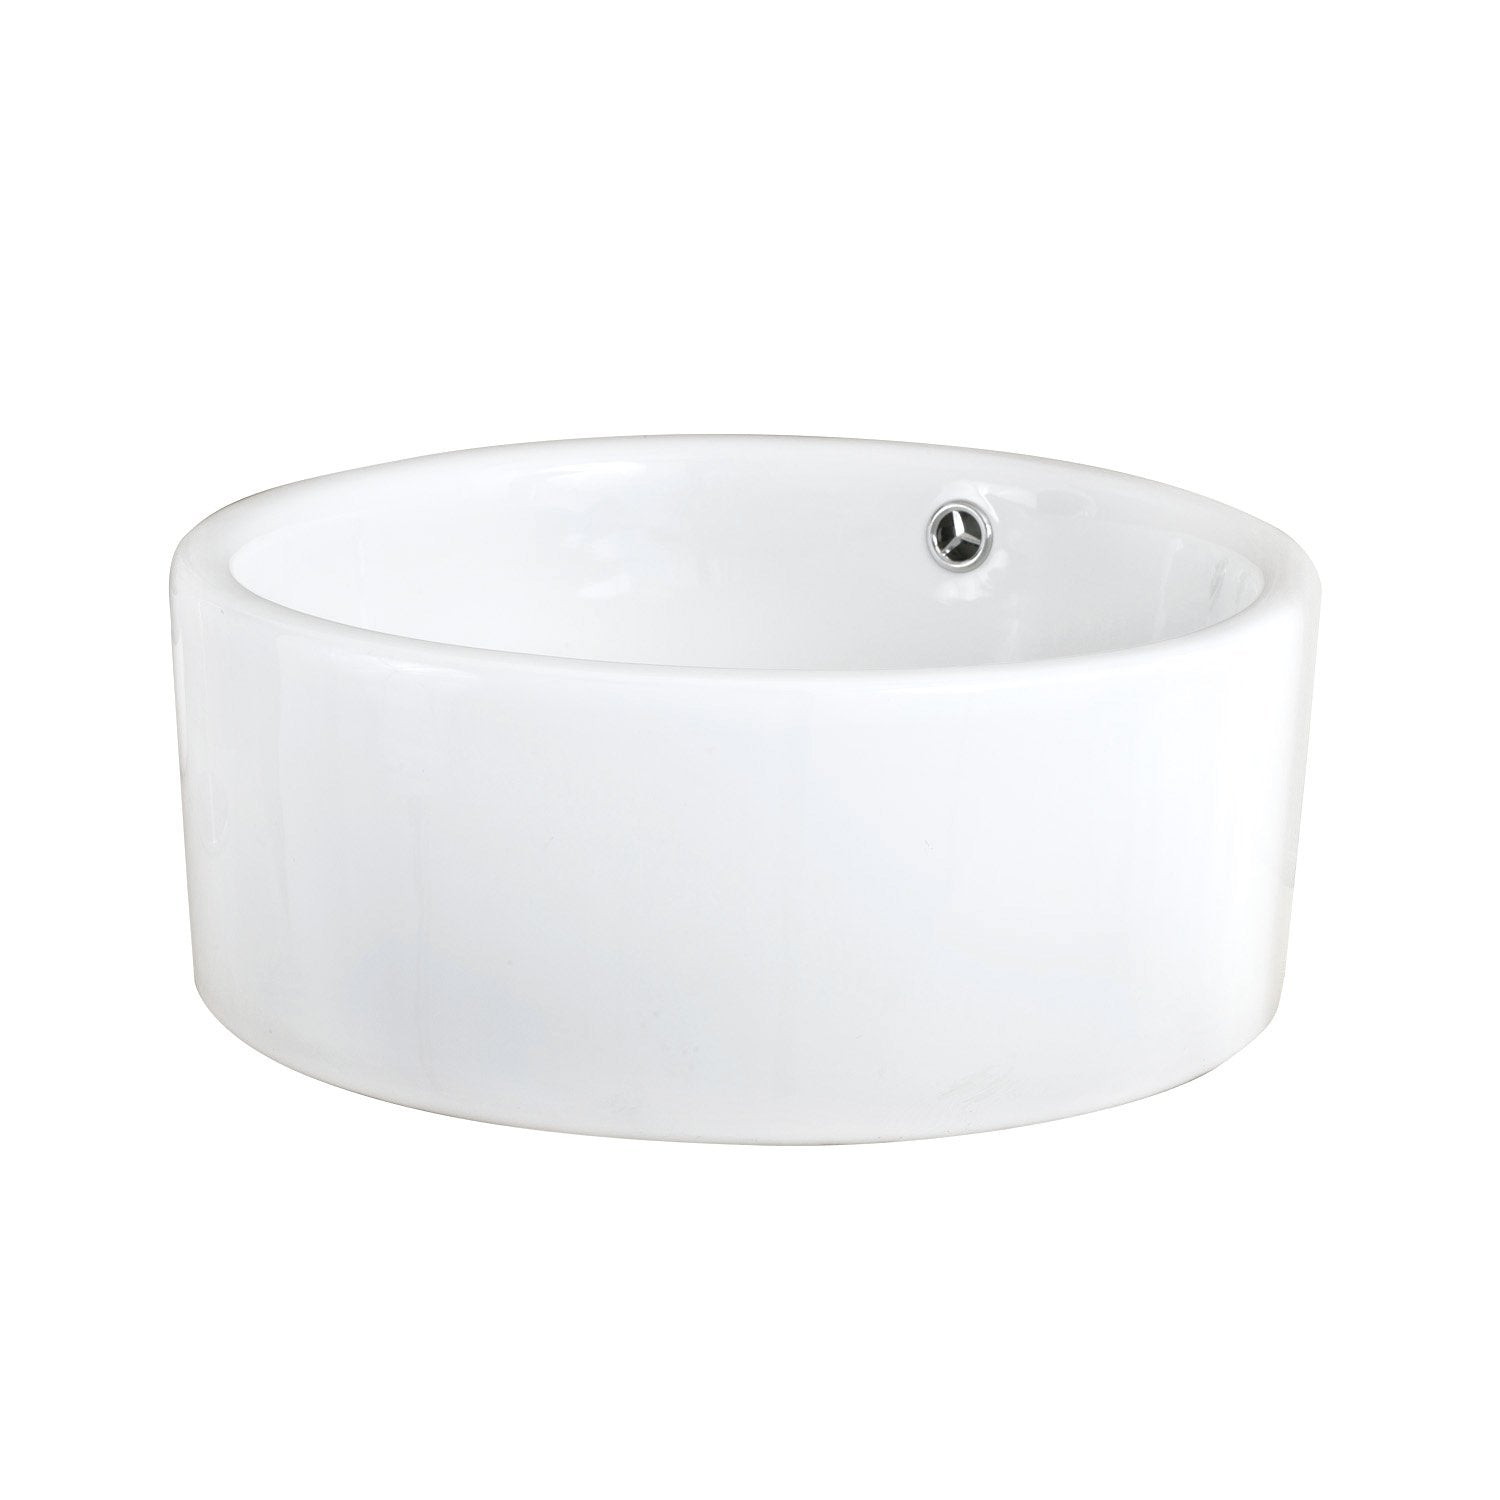 DAX Ceramic Round Single Bowl Bathroom Vessel Sink, White Finish, ?Ã² 16-1/2 x 4-1/2 Inches (BSN-218)